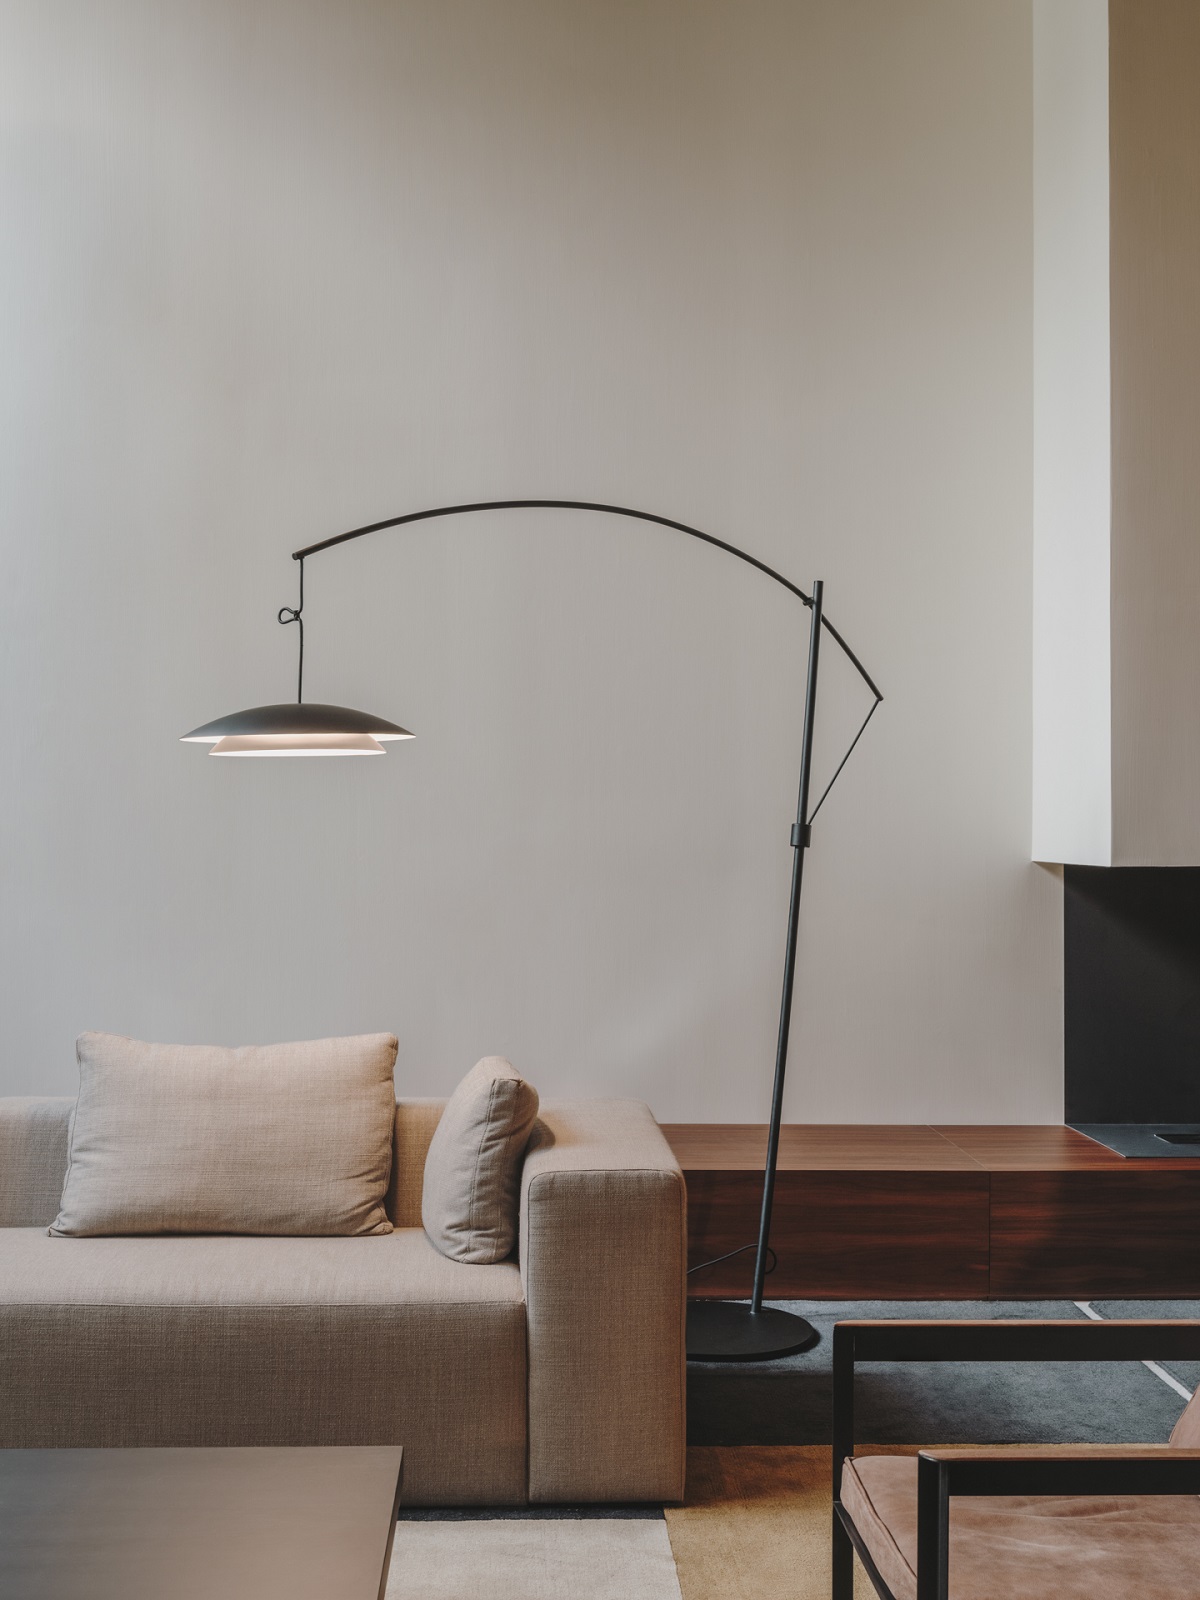 A lamp over a sofa